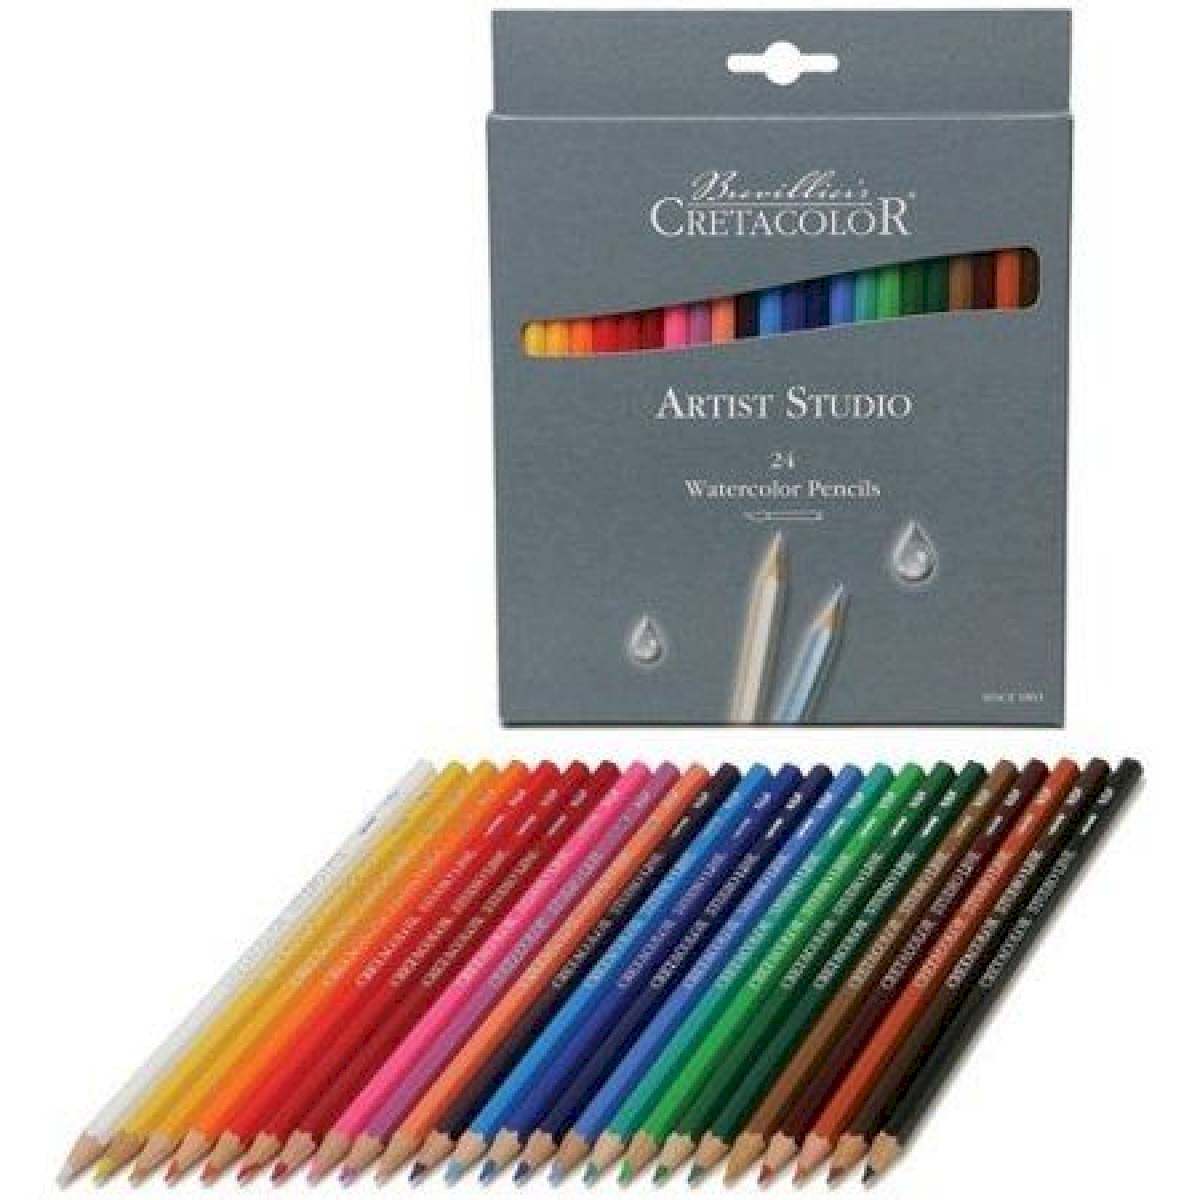 Brevillier's - 24 crayons Artist Studio Aquarelle